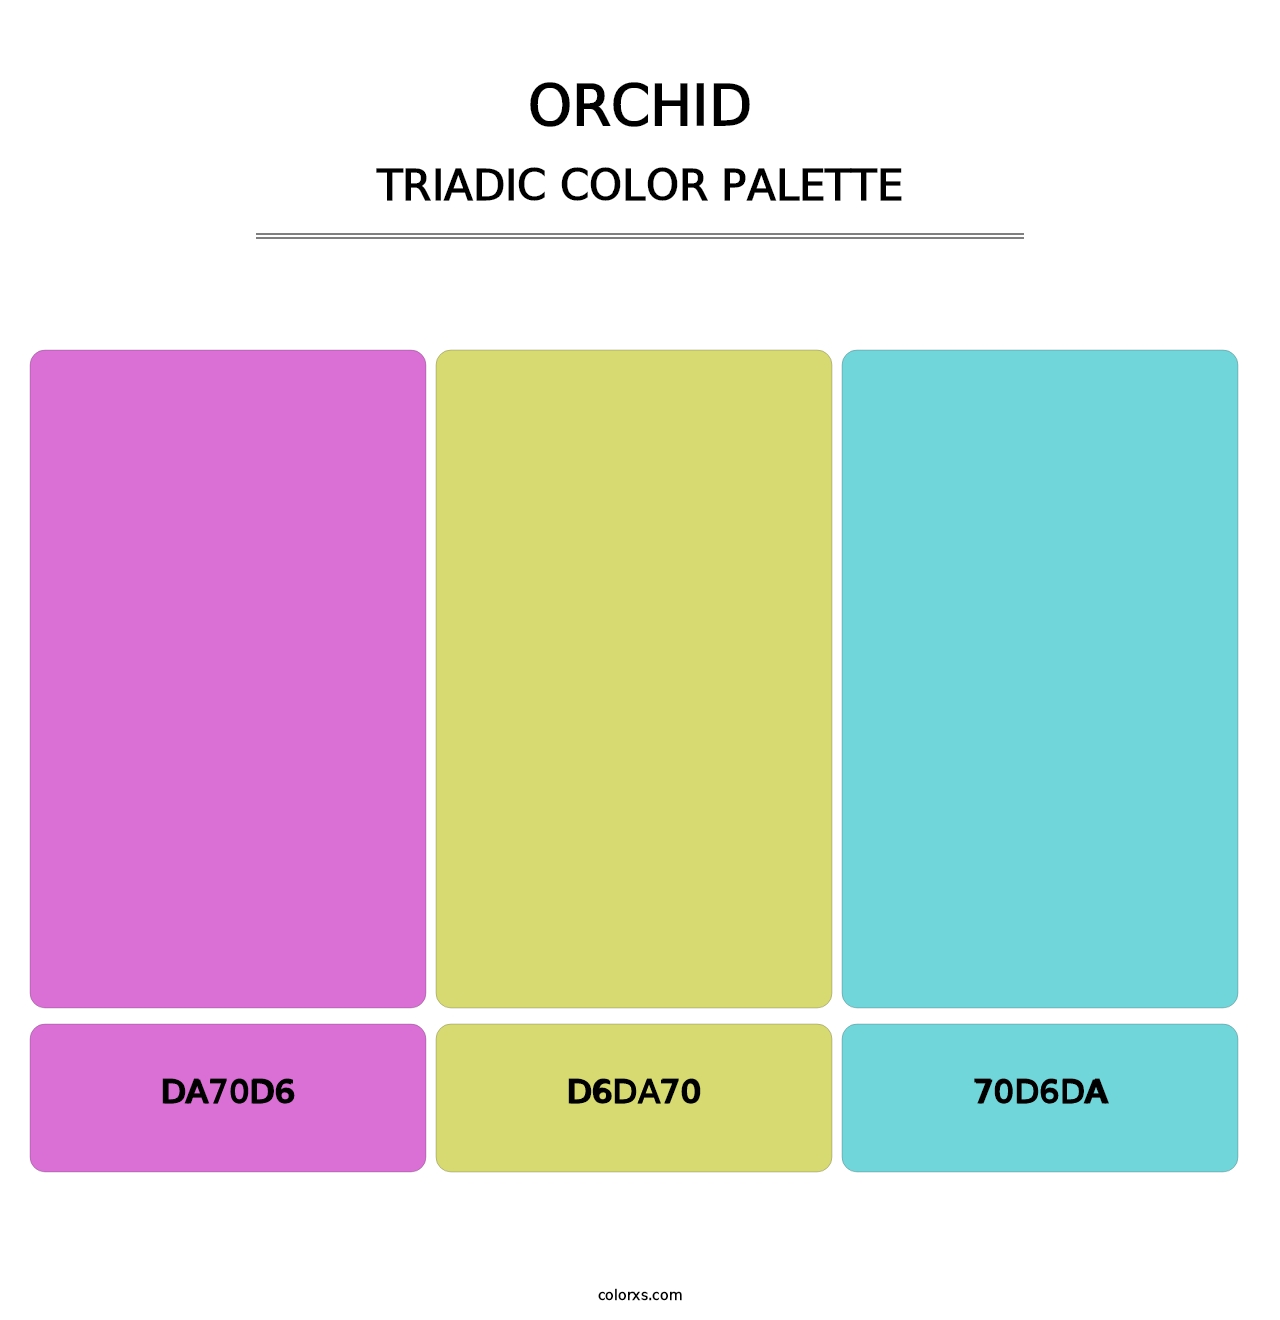 Orchid - Triadic Color Palette